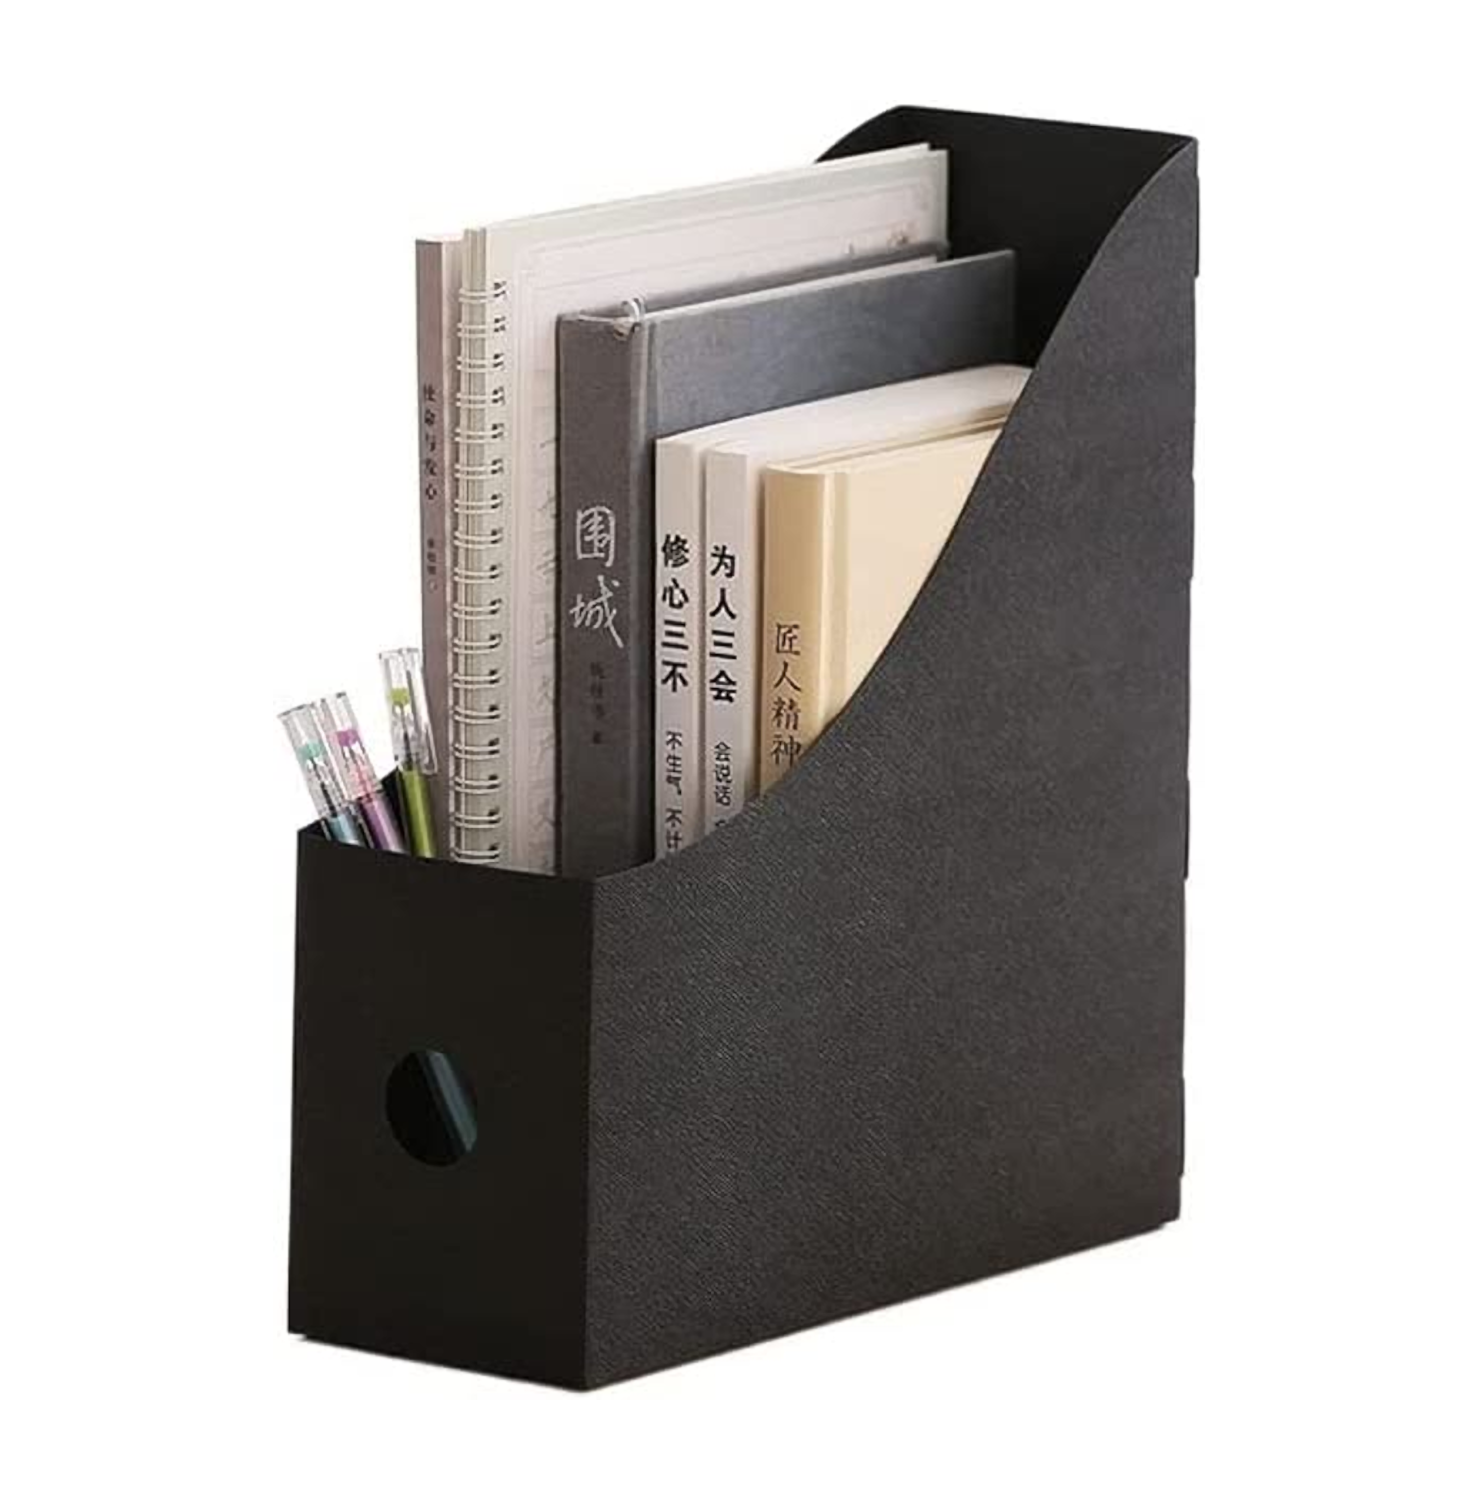 File Storage Box - Foldable File Box Student Desk Accessories Home Office Storage Thick Plastic Container Bookshelf - Black